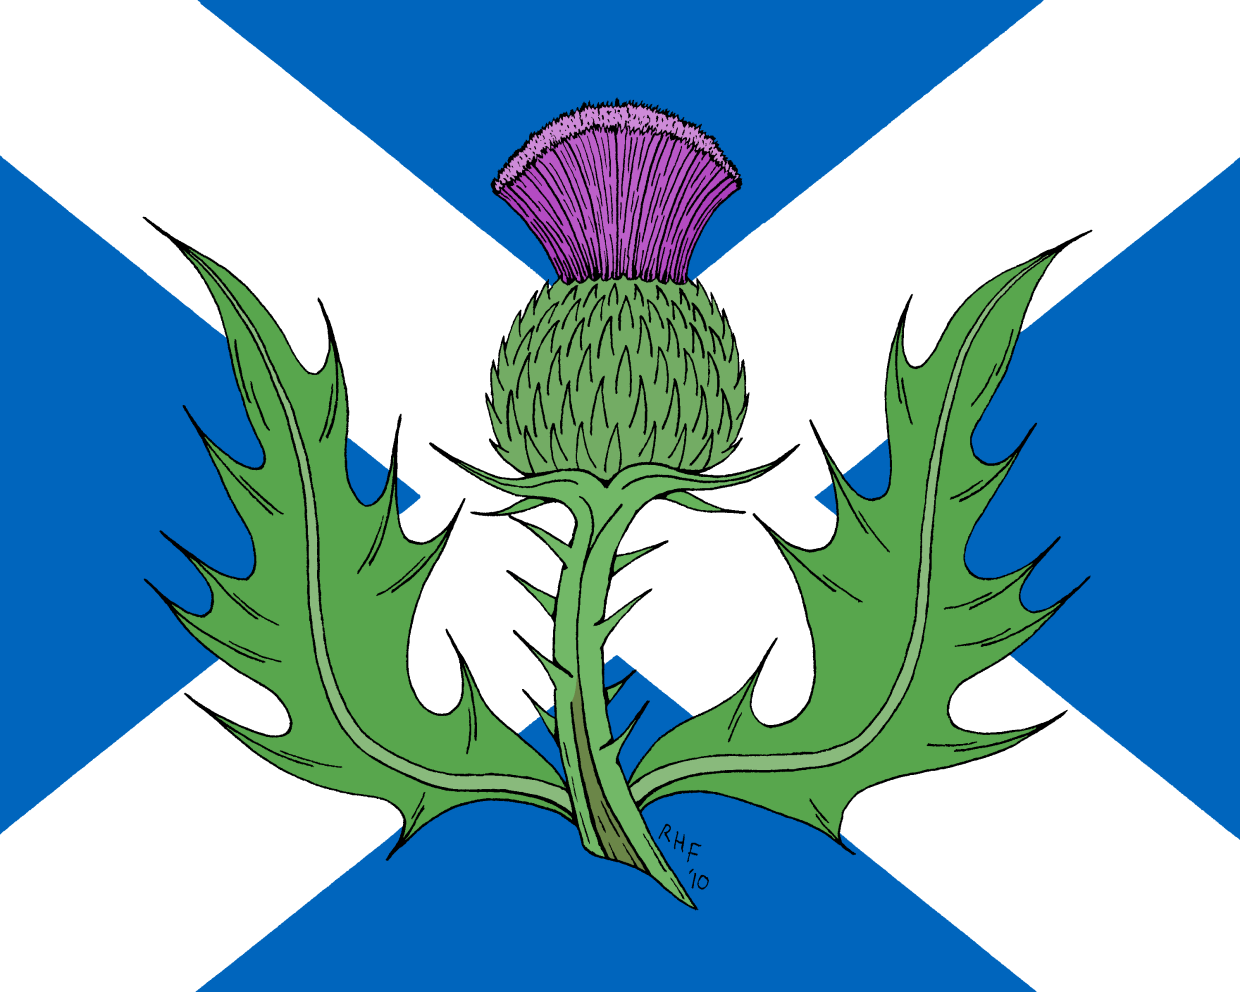 Scotland plants. Цветок чертополоха символ Шотландии. Национальный символ Шотландии чертополох. Thistle символ Шотландии. Национальный цветок Шотландии чертополох.